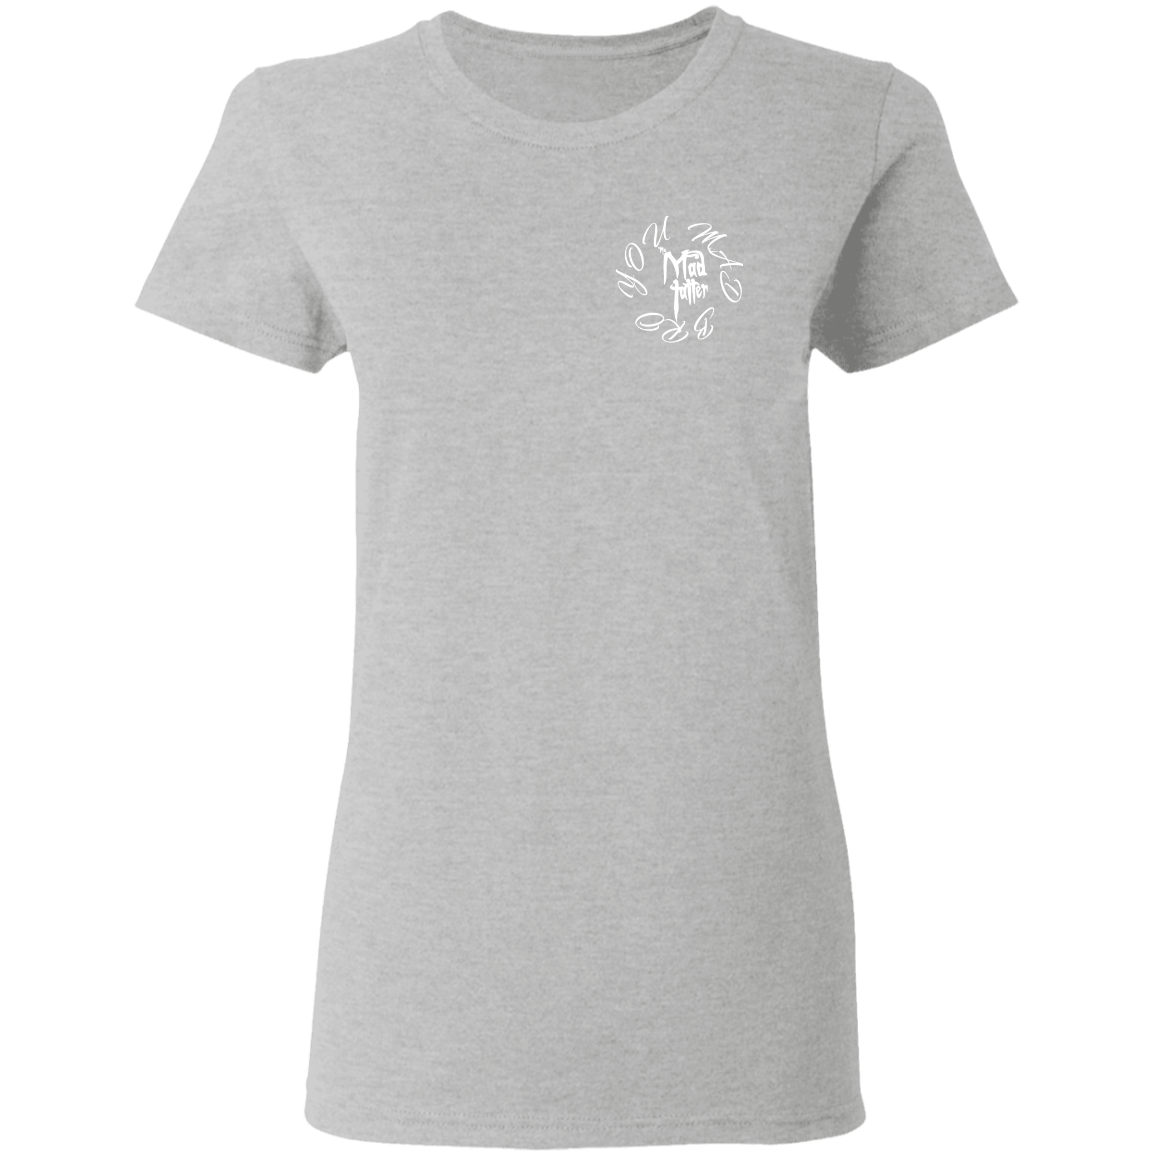 Ladies' Space Weasel T-Shirt - White Logo